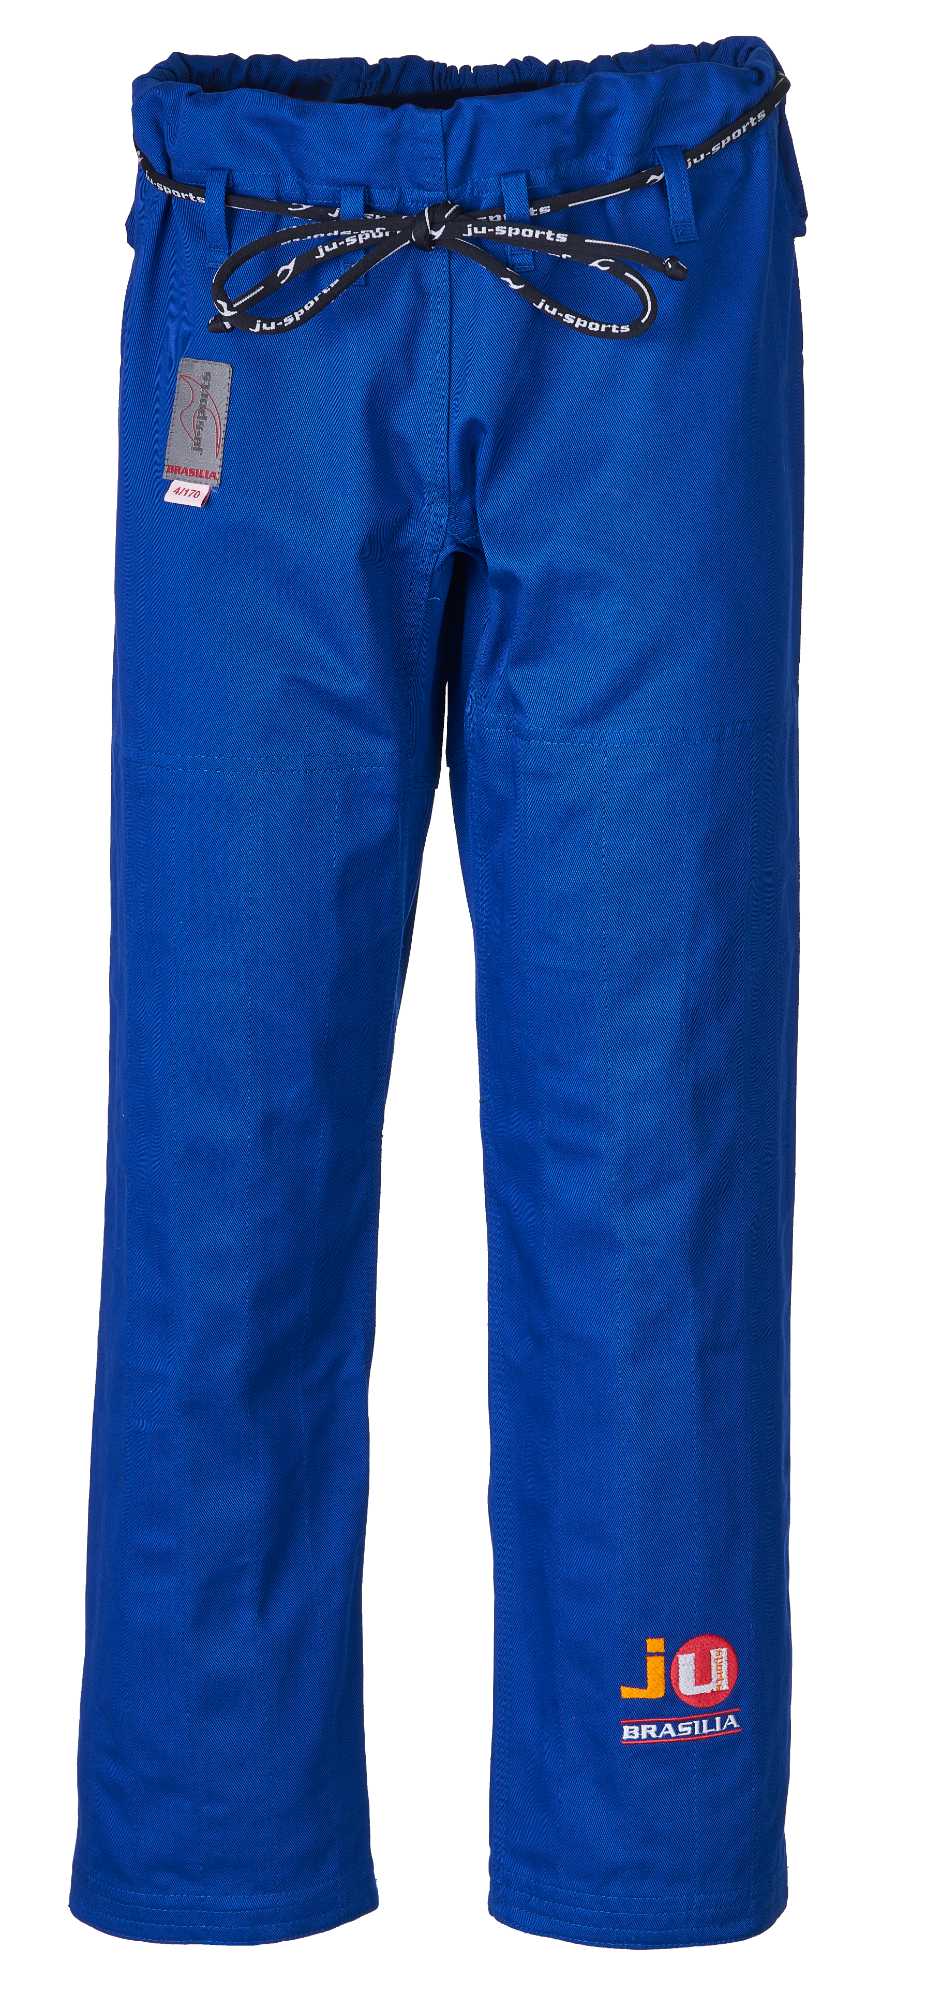 Judo pants "Brasilia", blue